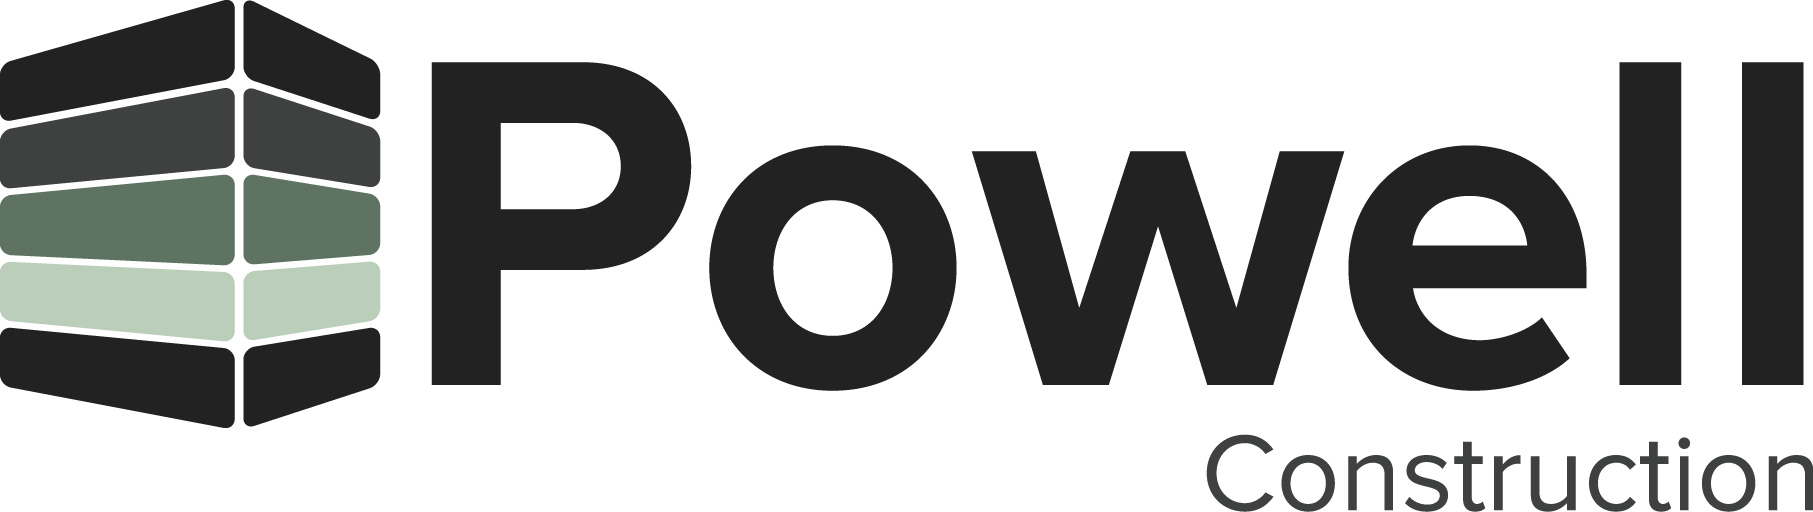 Powell Construction Logo